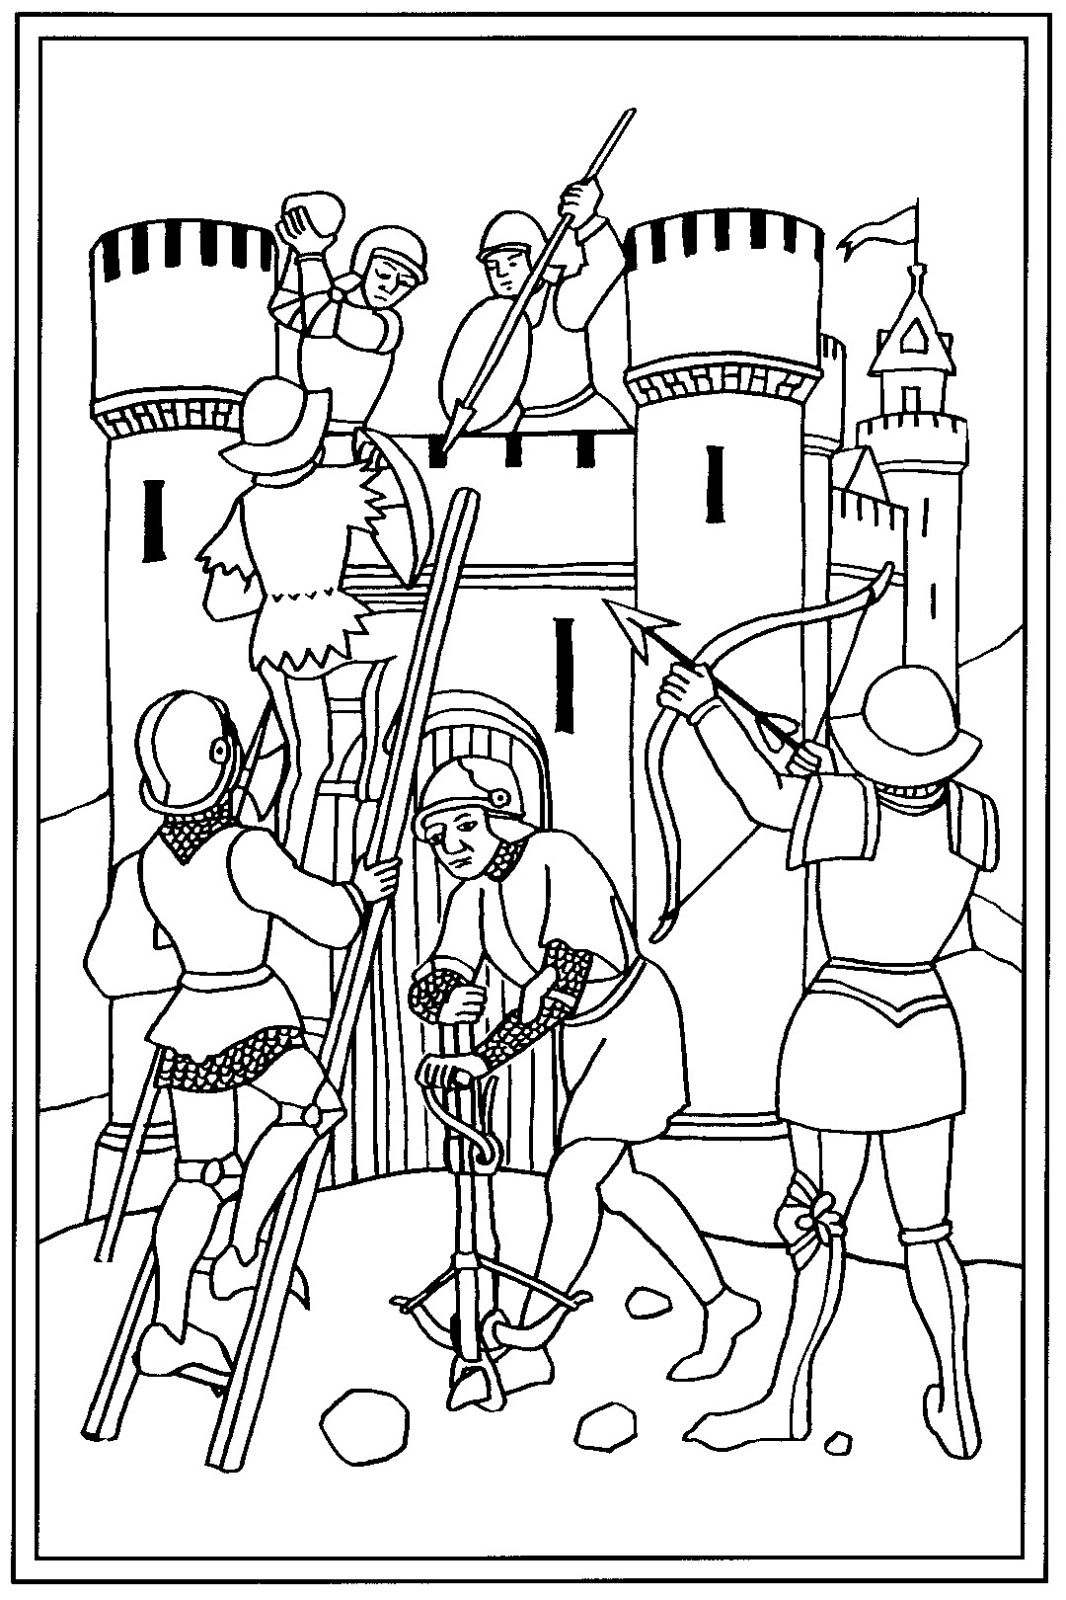 Dessin Chateau Moyen Age - Greatestcoloringbook ganzes Dessin Moyen Age Imprimer